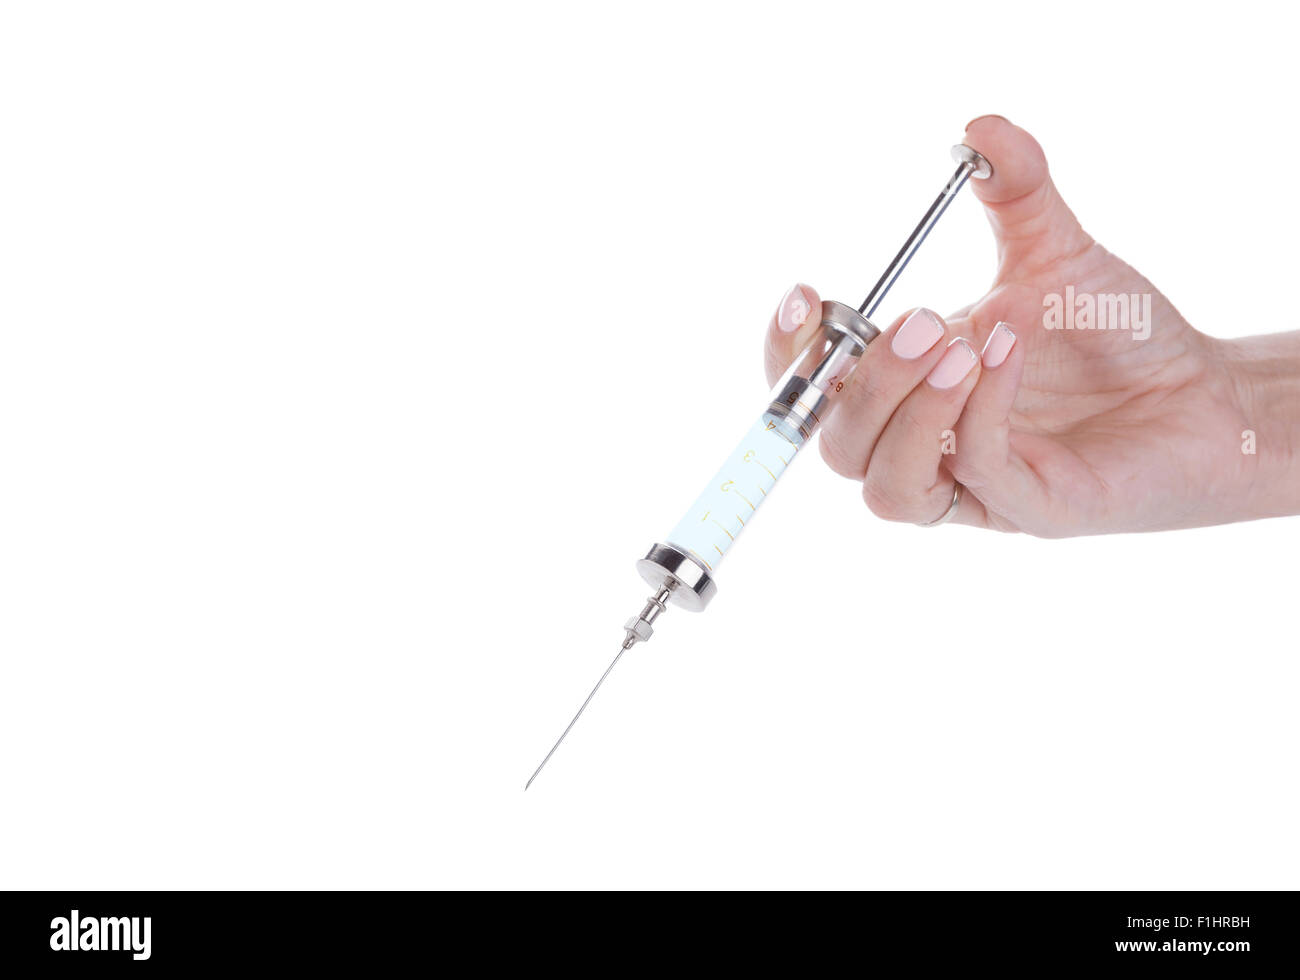 Old glass multiple use syringe in female hand, closeup on white background Stock Photo